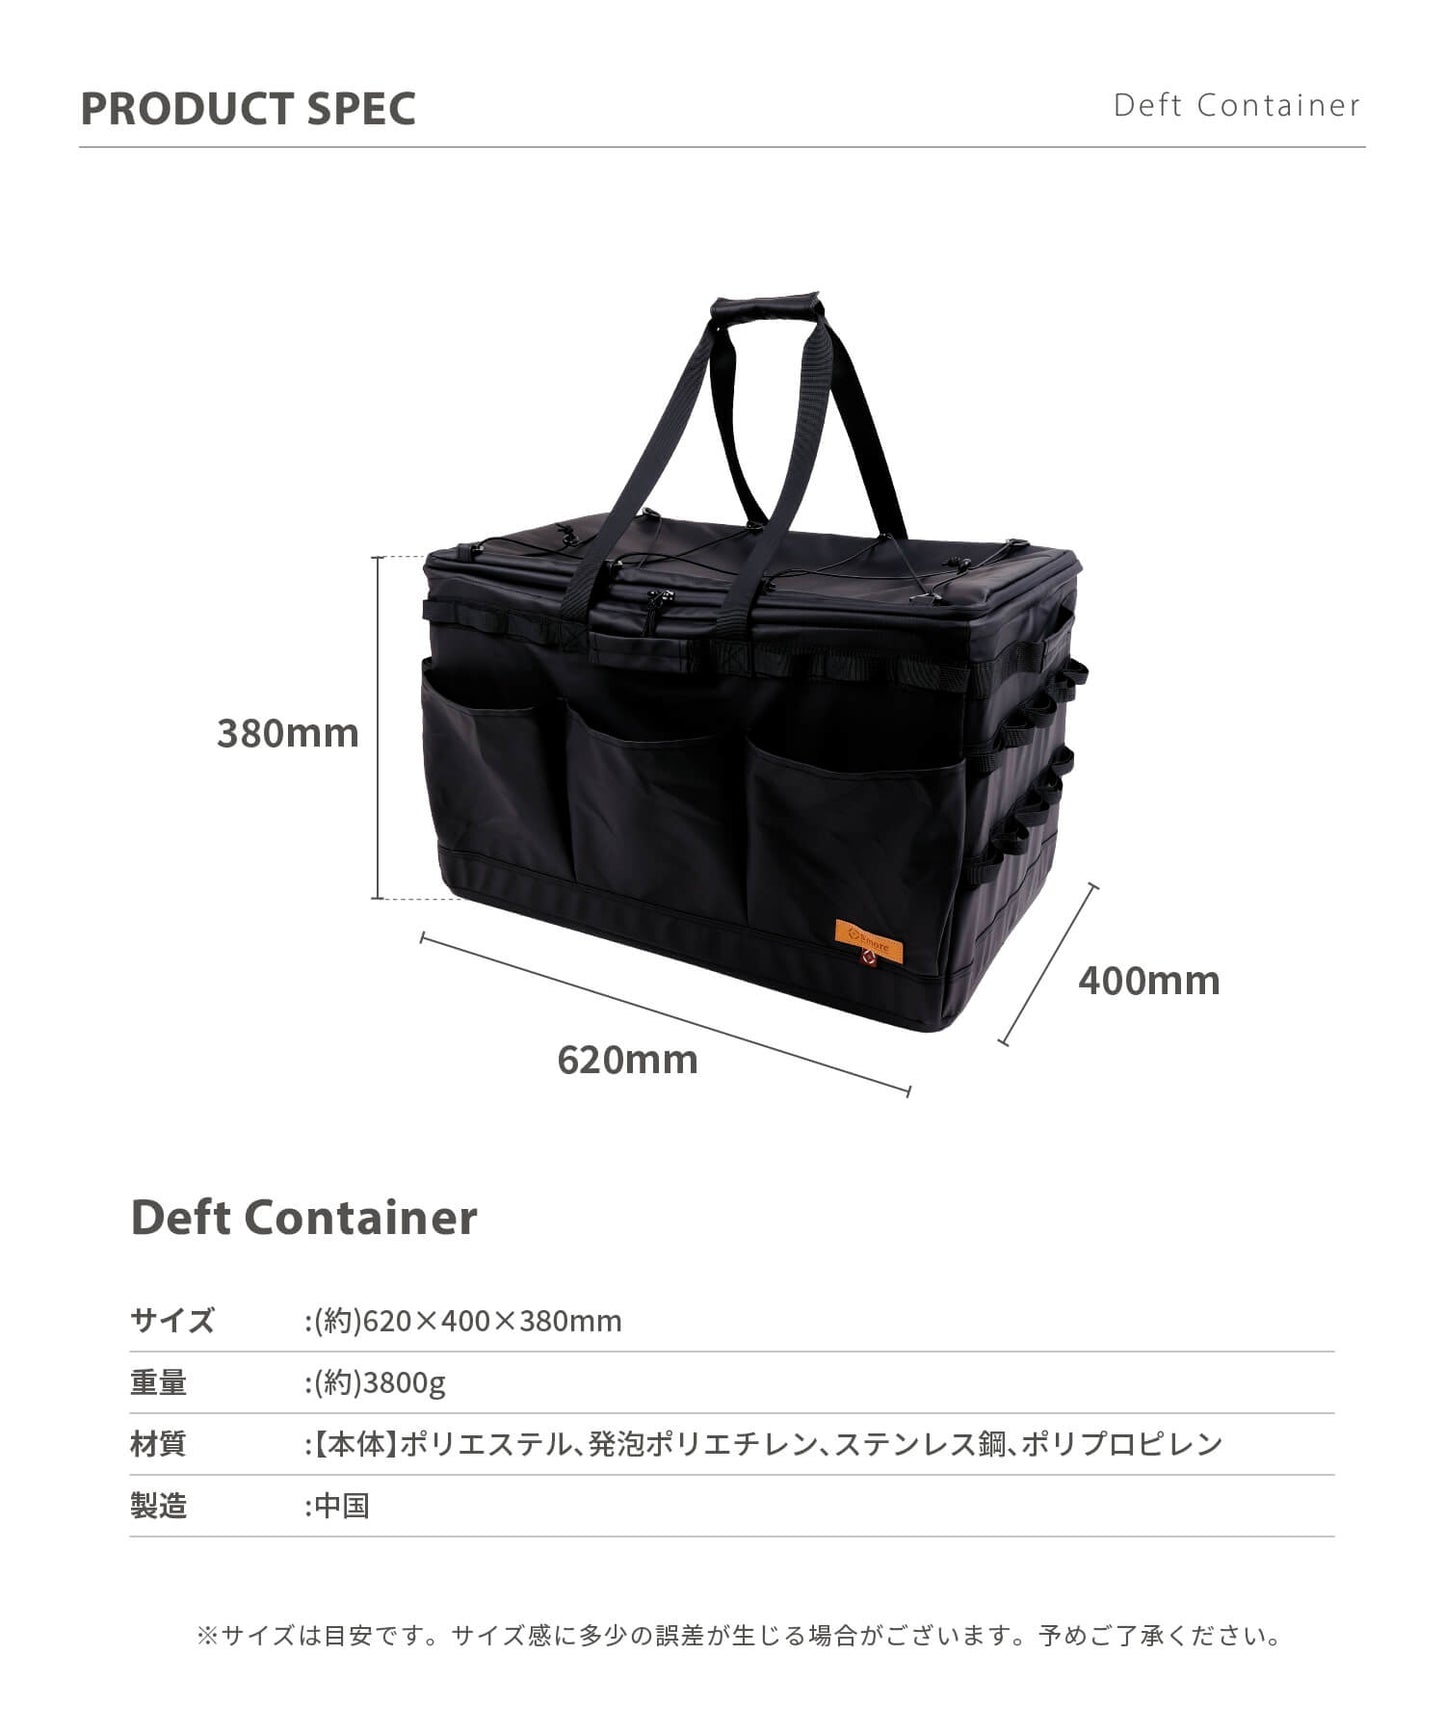 New!!【 Deft Container 】デフトコンテナ 大容量収納可能なコンテナバッグ